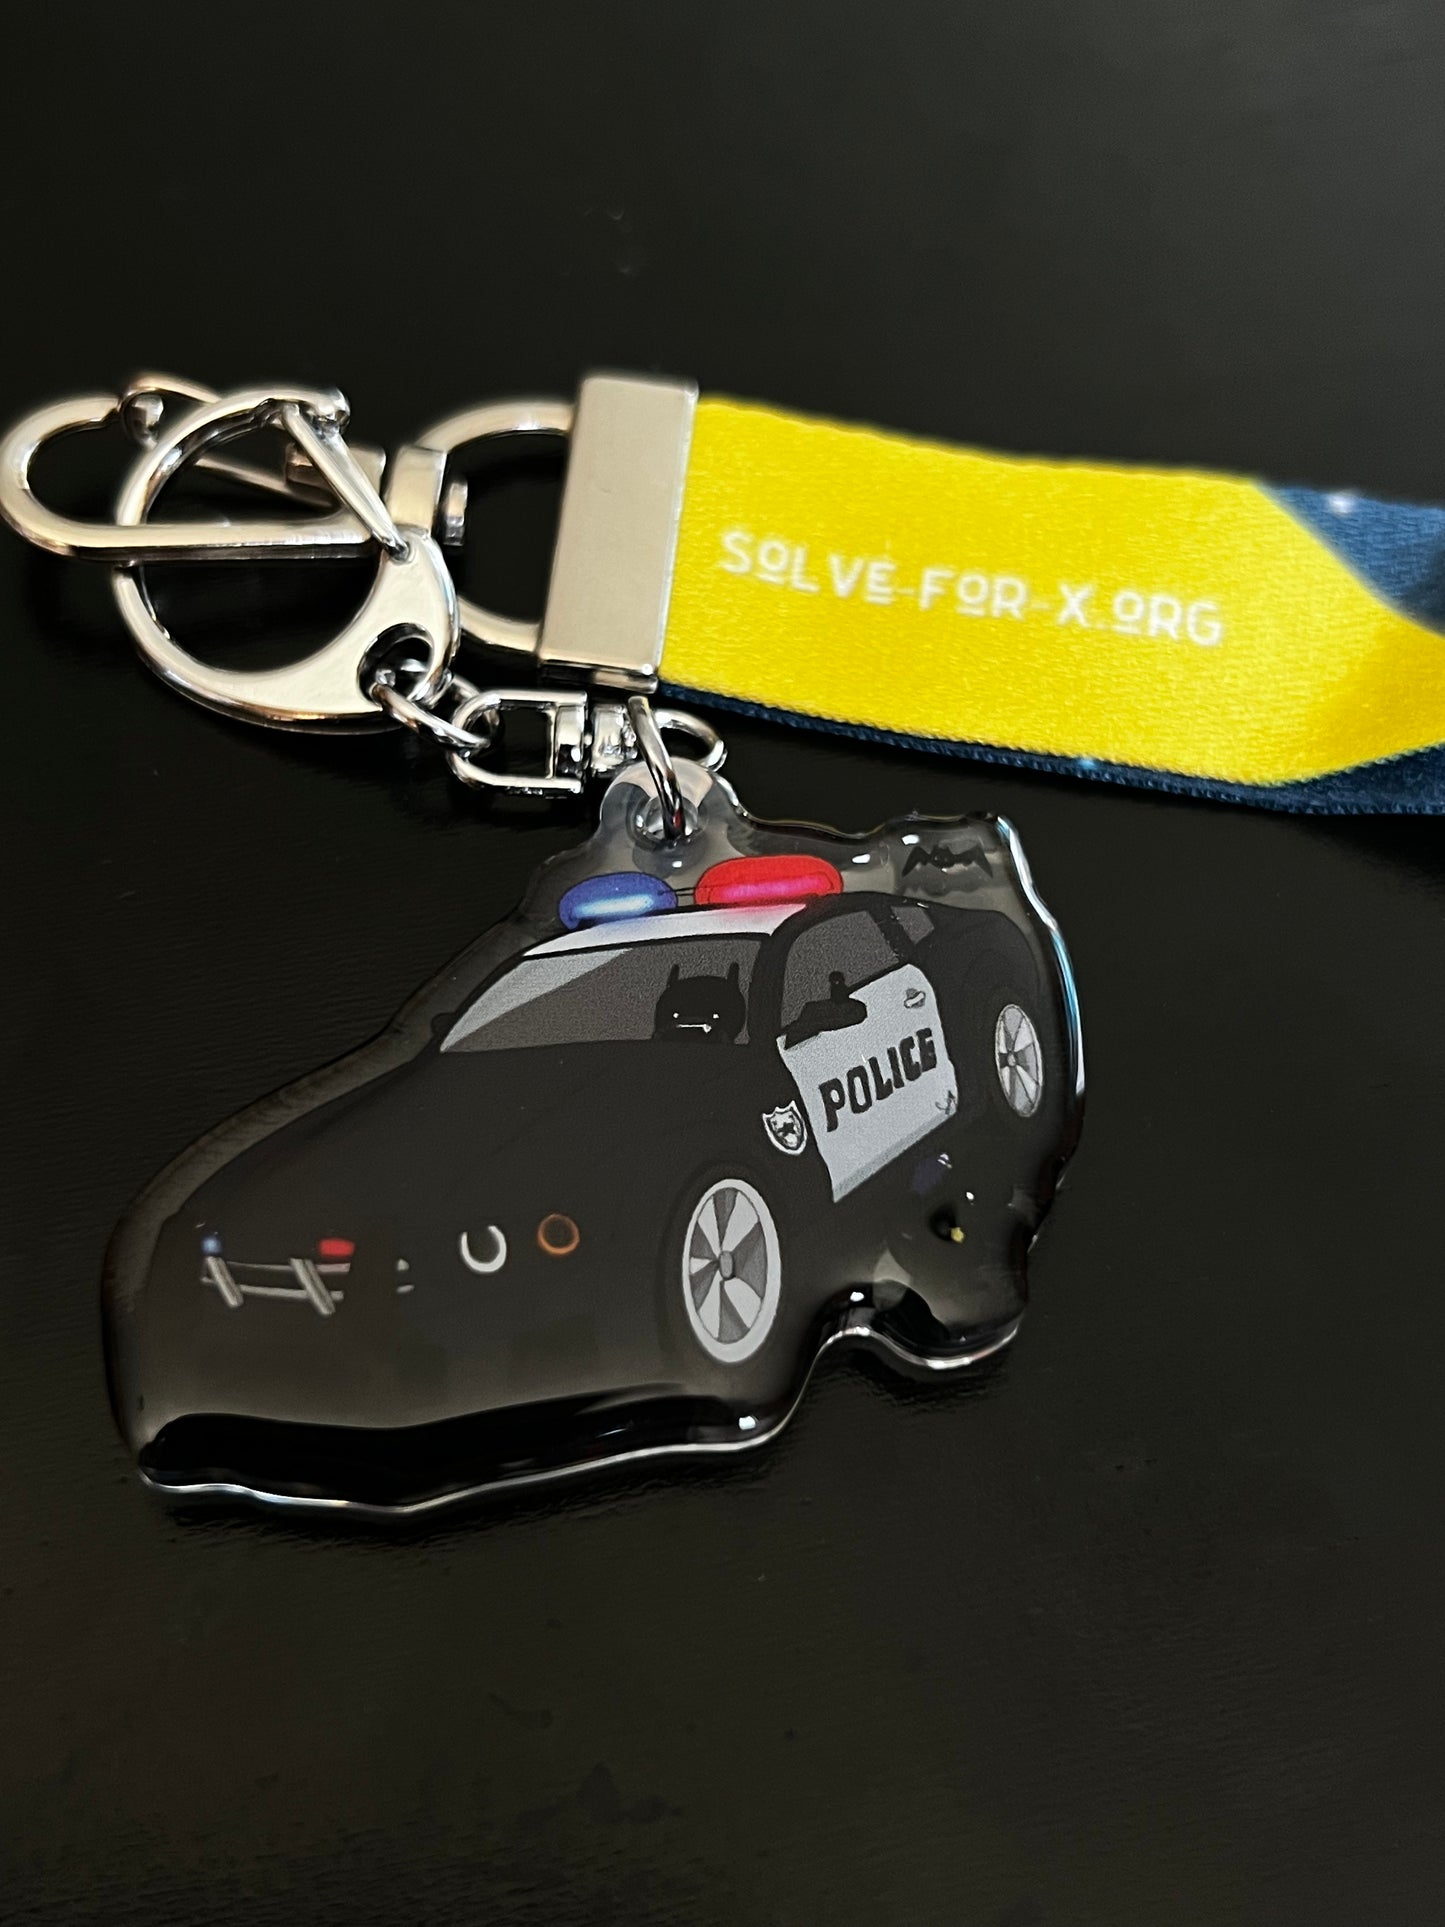 First Responder - Police Car keychain